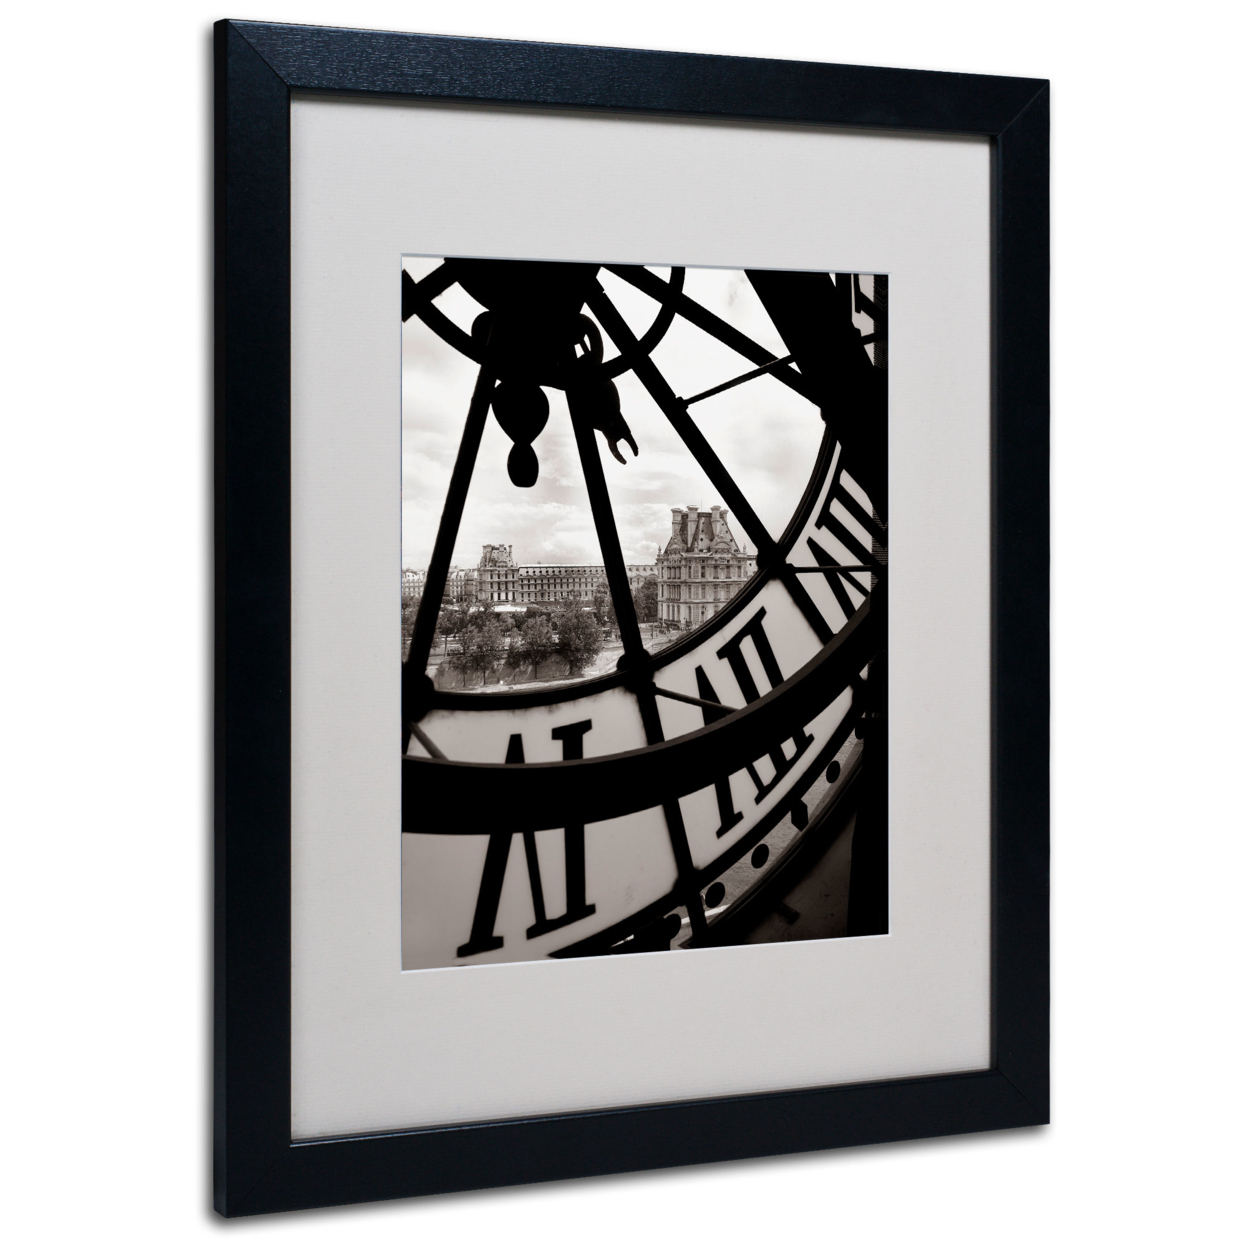 Chris Bliss 'Big Clock' Black Wooden Framed Art 18 X 22 Inches